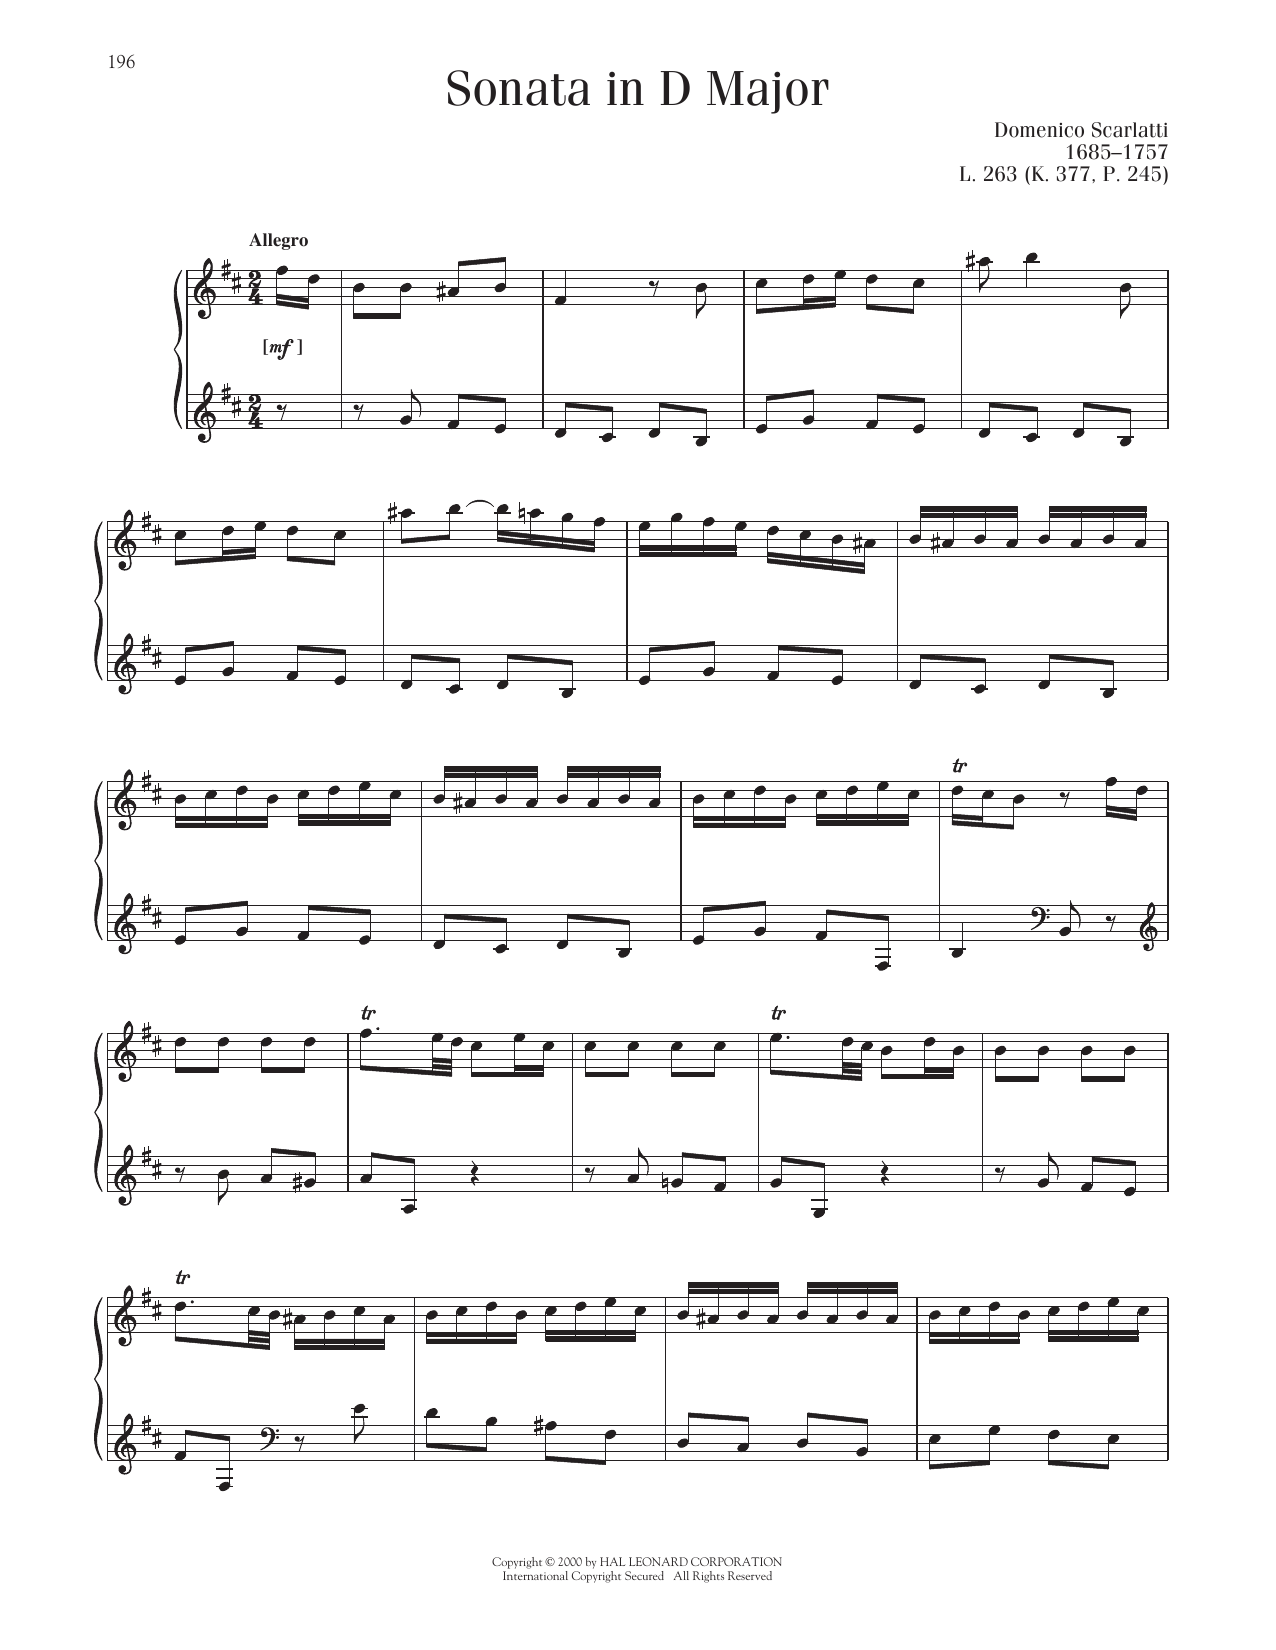 Domenico Scarlatti Sonata In D Major, K. 377 sheet music notes and chords arranged for Piano Solo